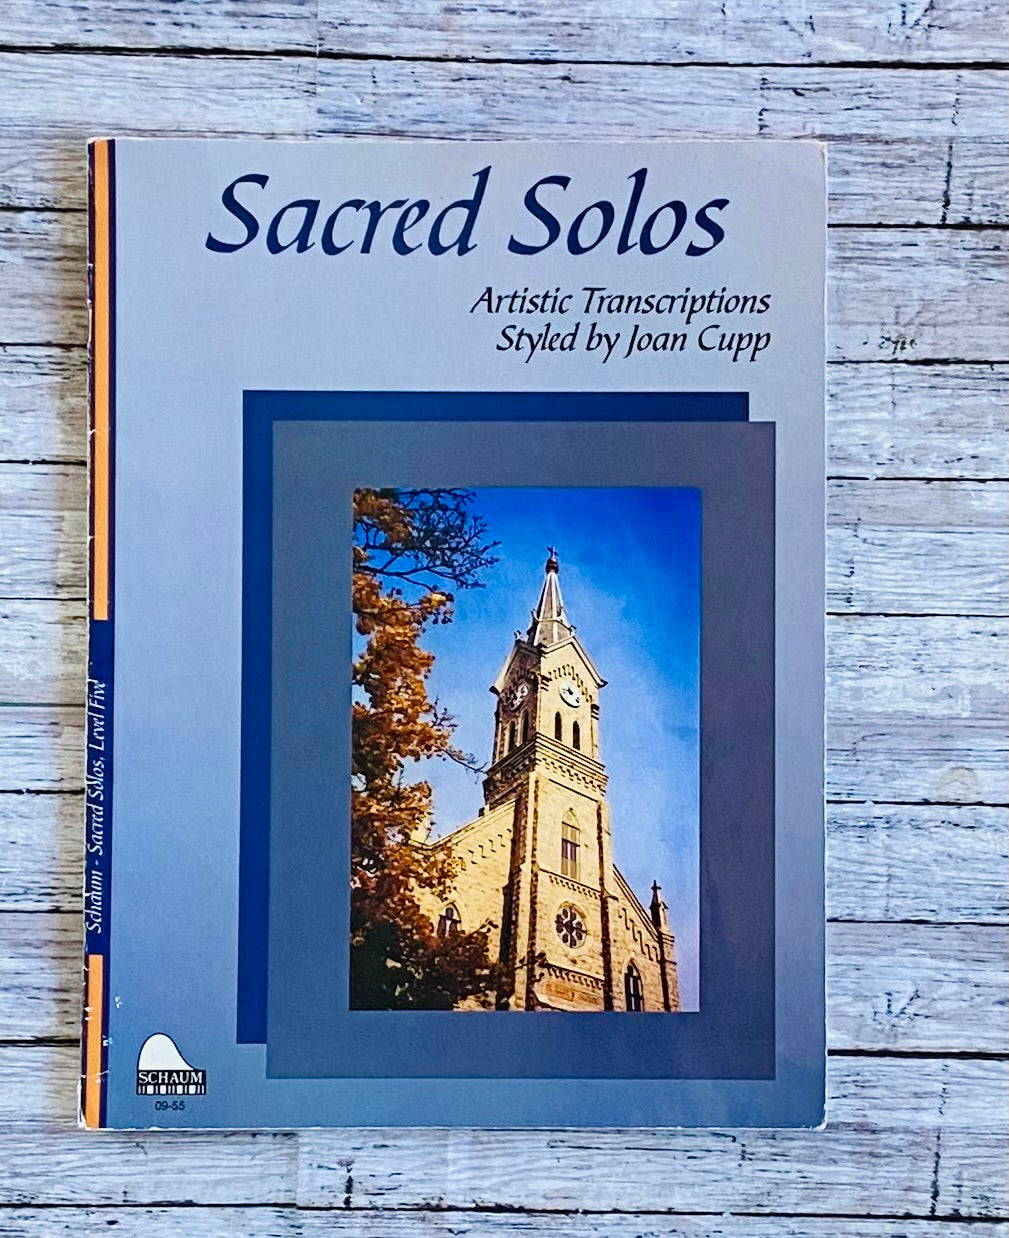 Sacred Solos: Artistic Transcriptions